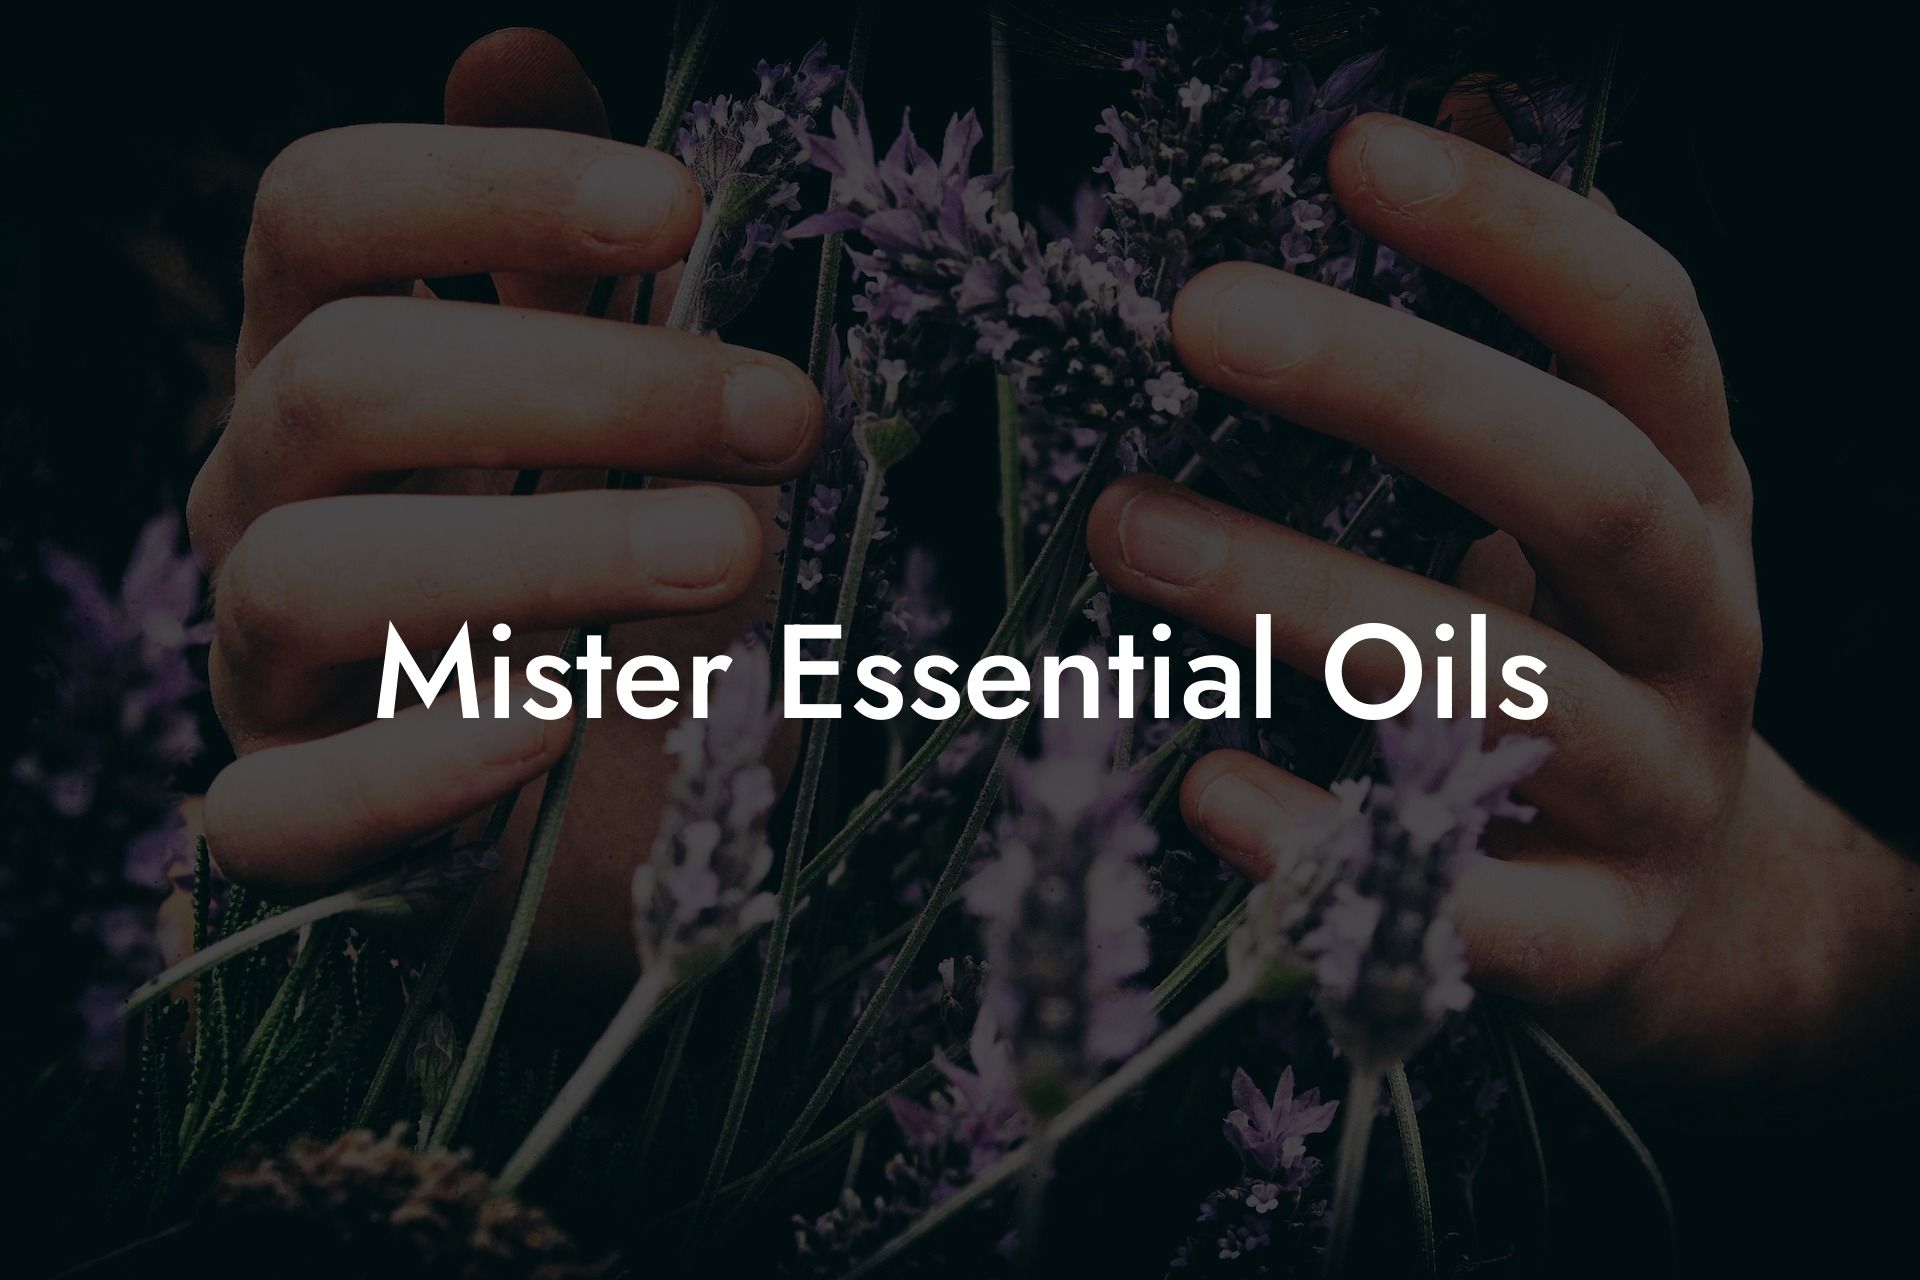 Mister Essential Oils